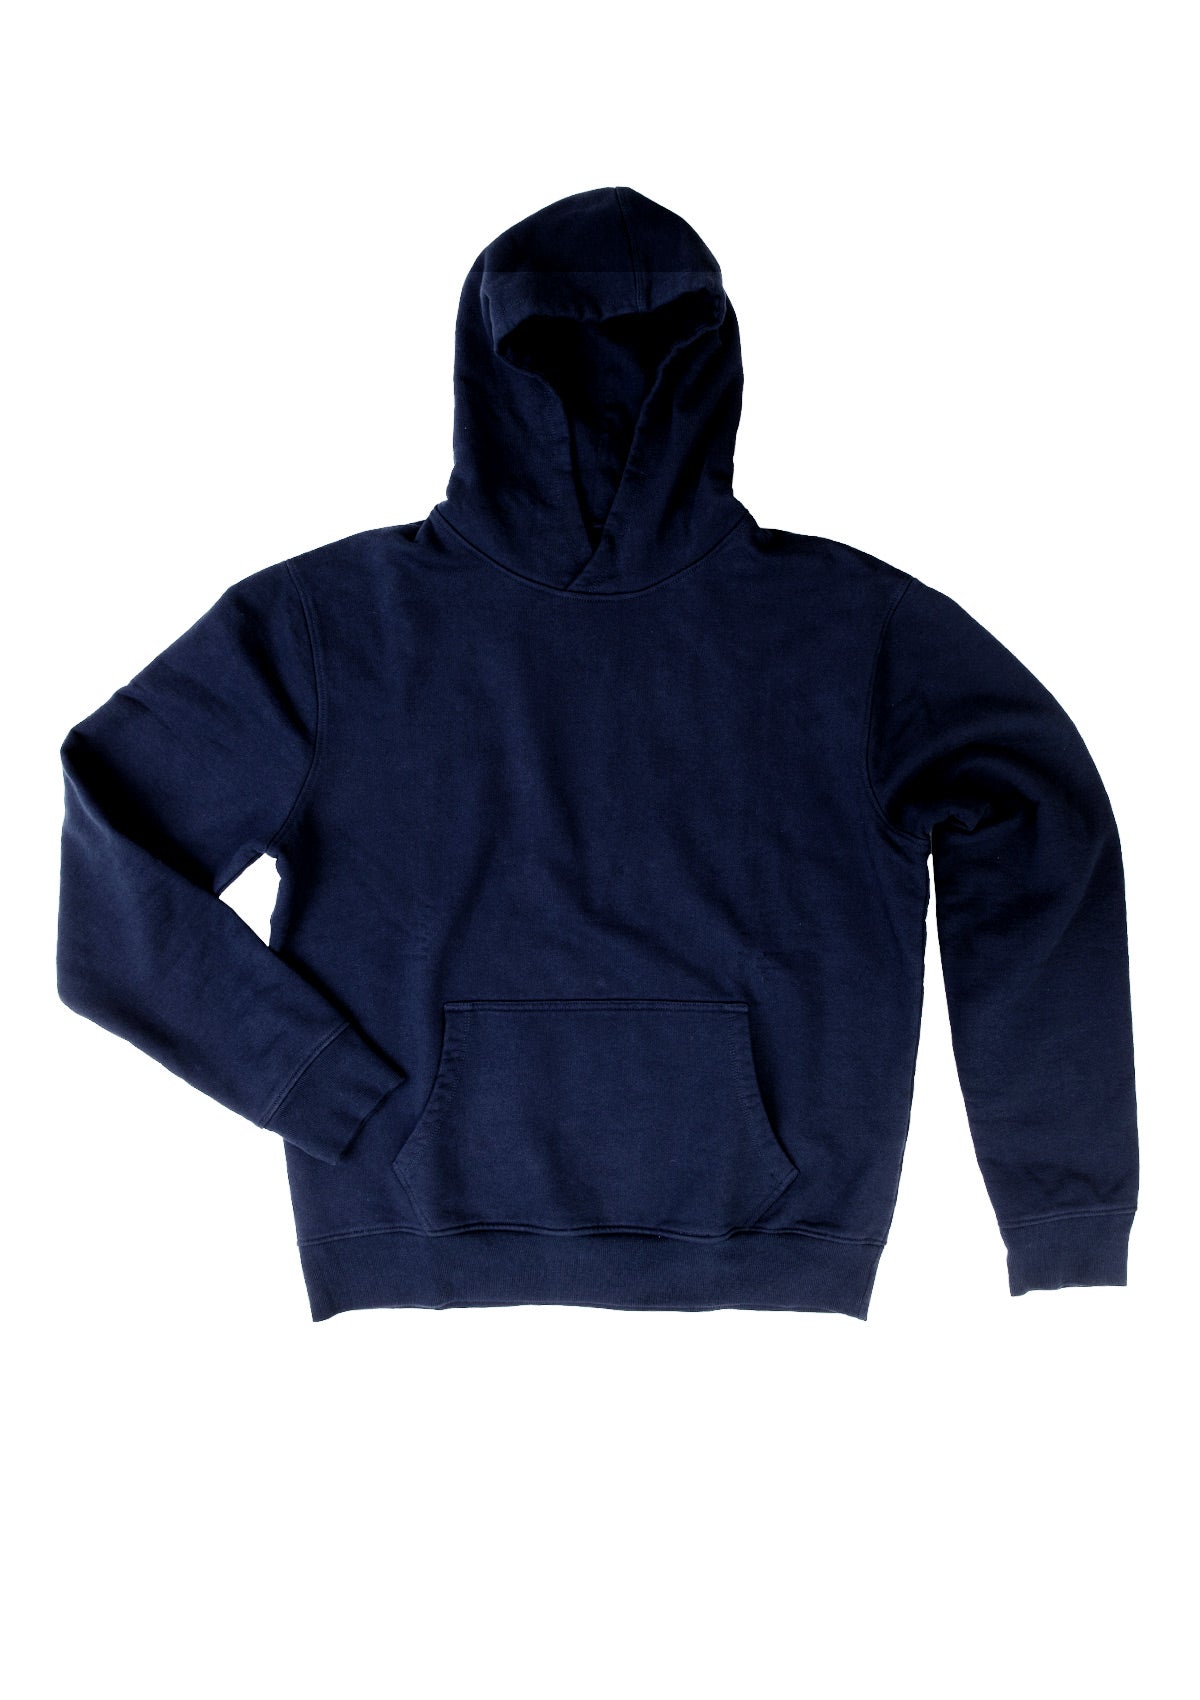 needessentials organic cotton hoodie jumper navy plain